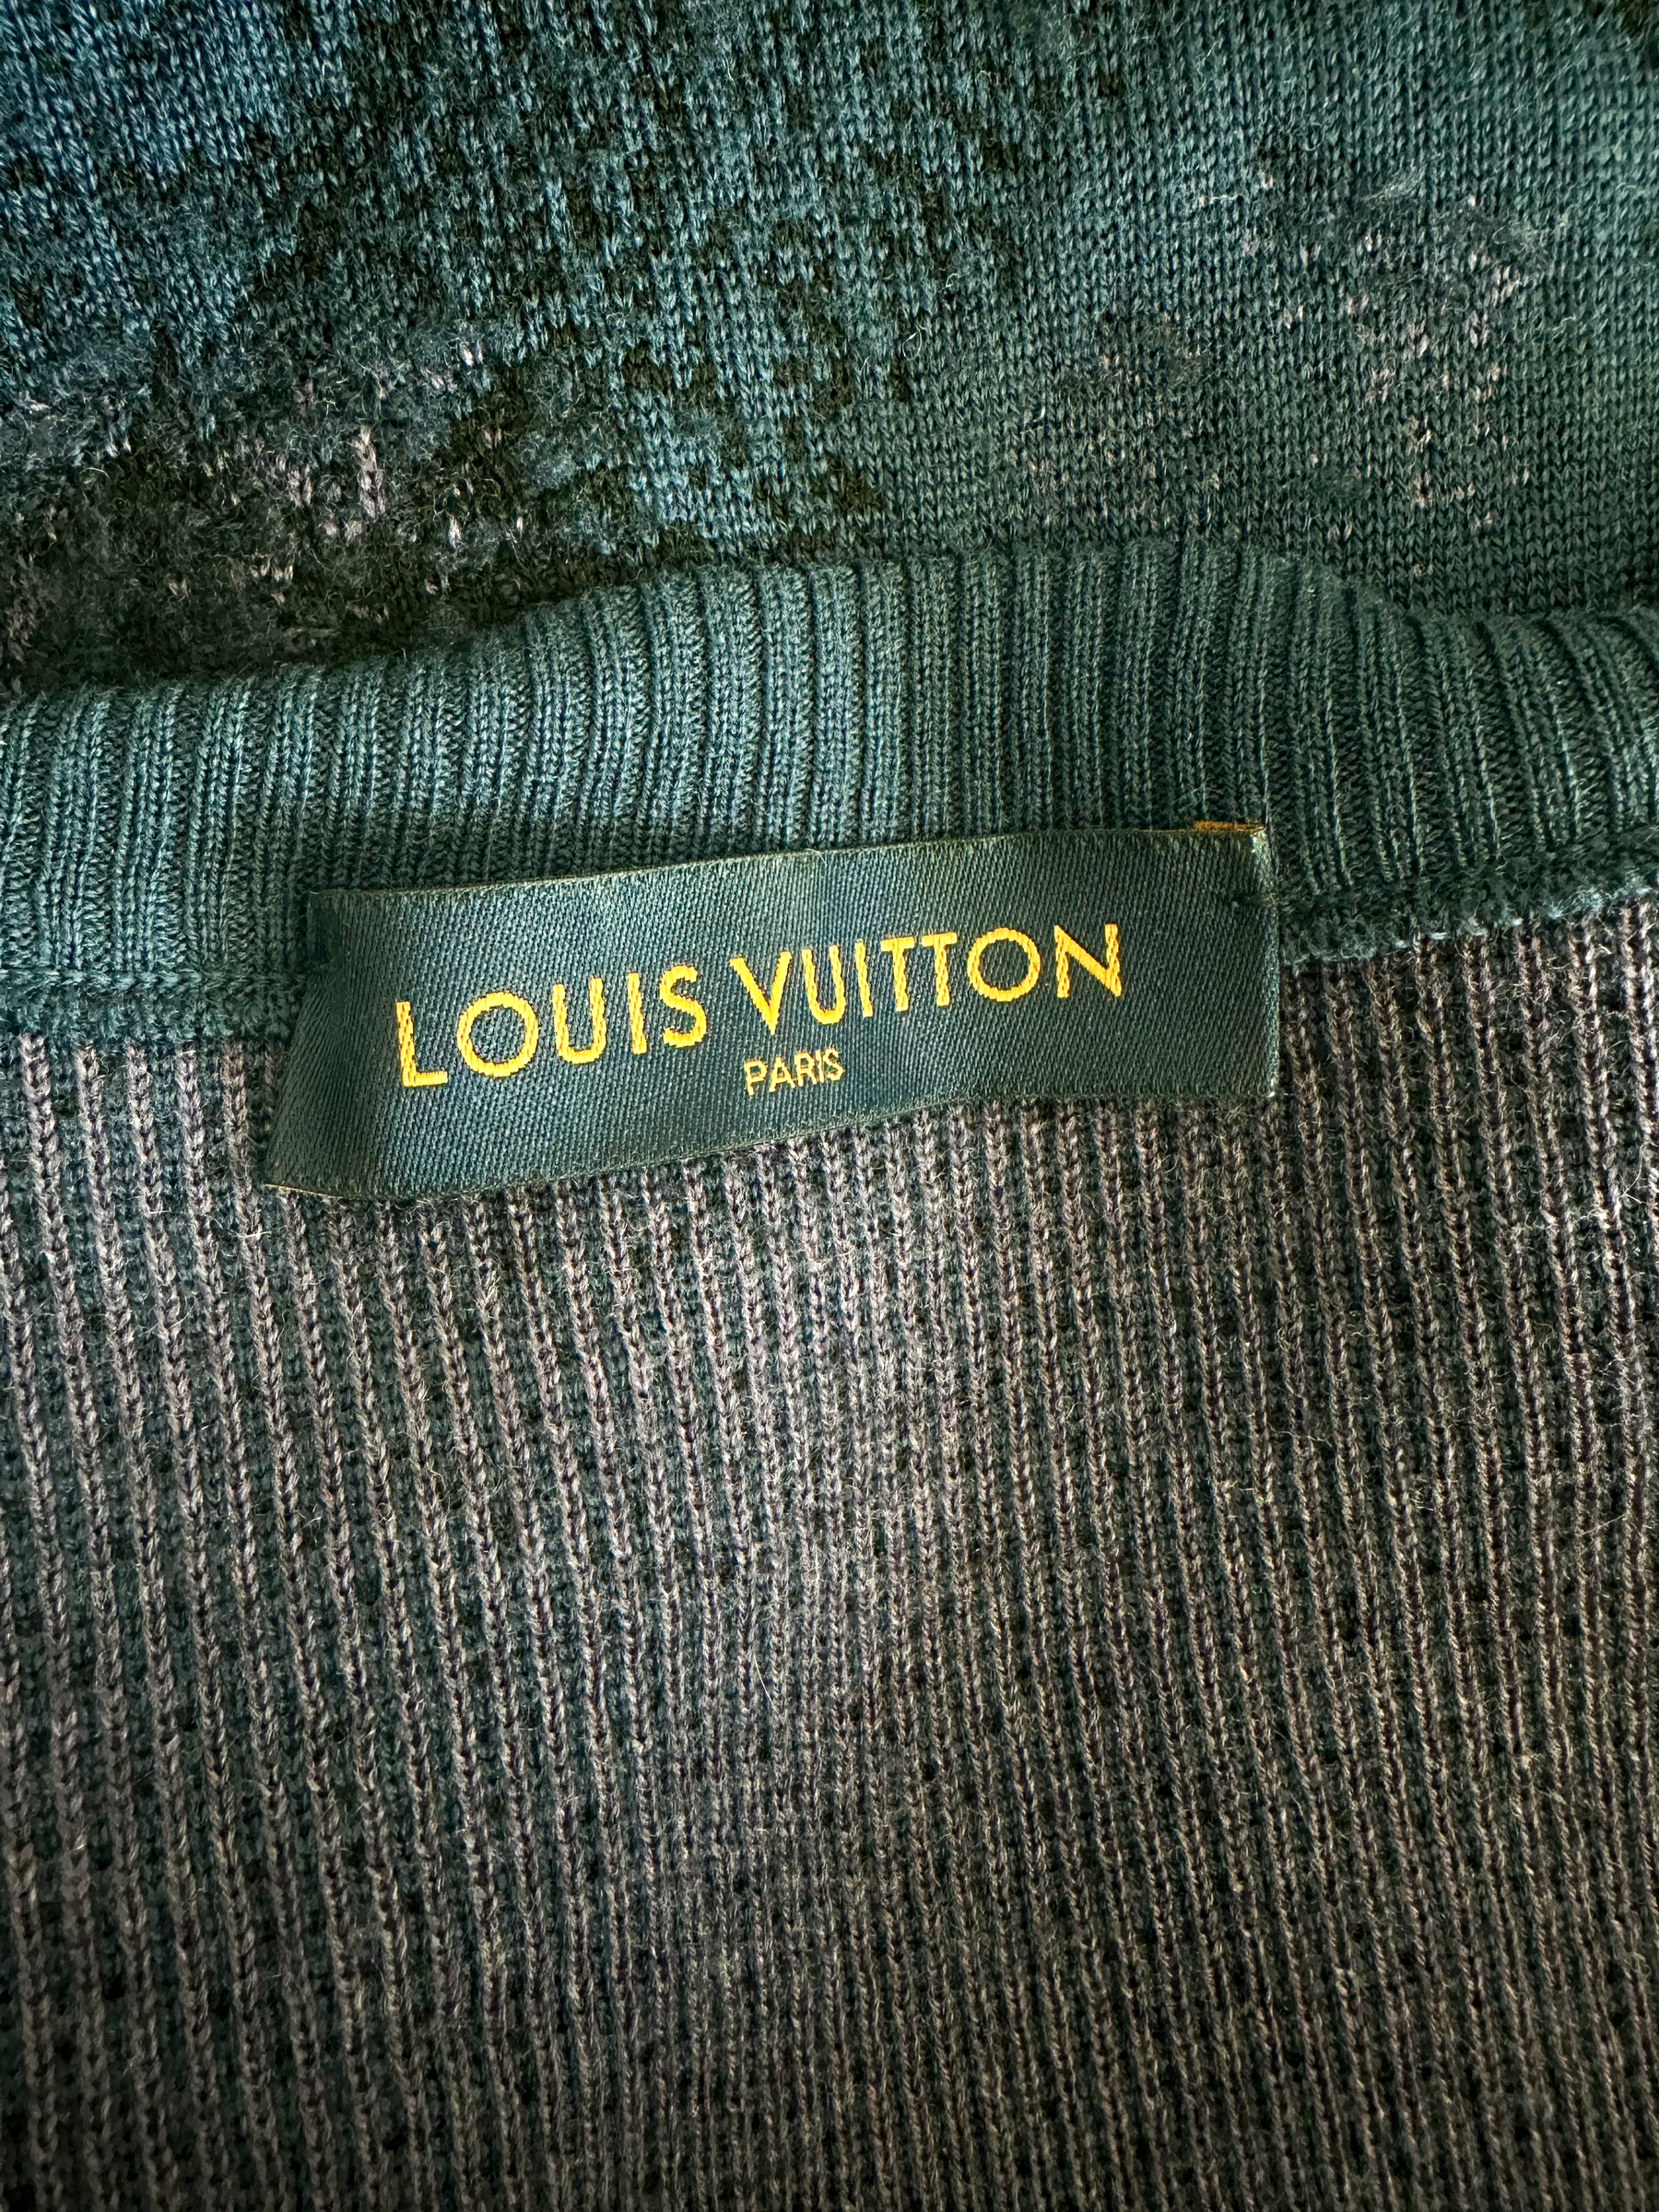 Louis Vuitton Wizard Of Oz Brick Road Jacquard